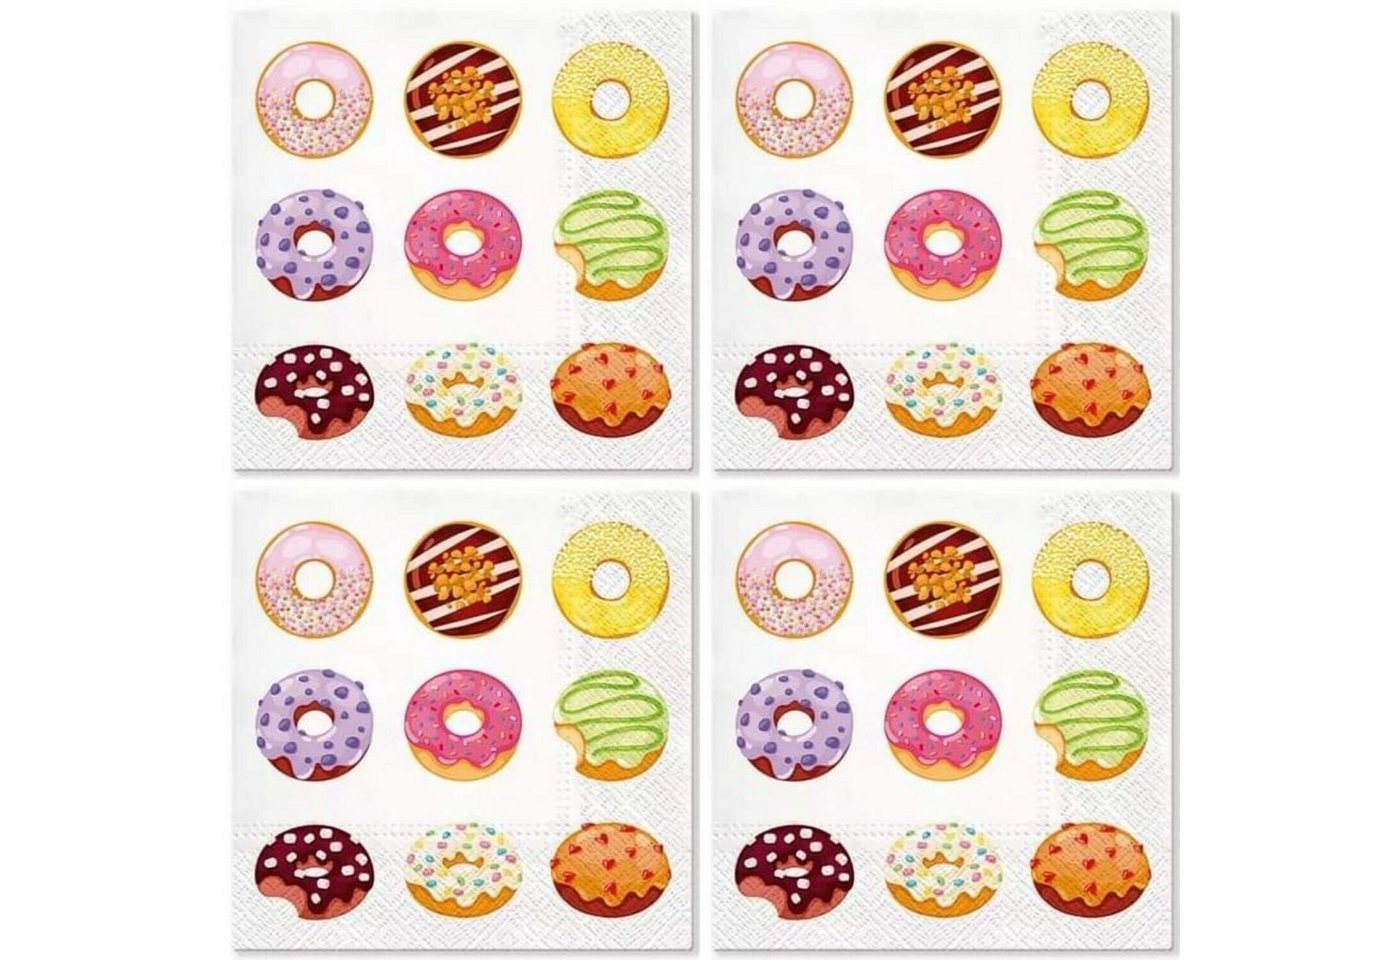 PAW Sp. z o.o. Papierserviette 20 Stück ca. 33x33cm 3-lagig, leckere Donuts, Tasty Donuts von PAW Sp. z o.o.